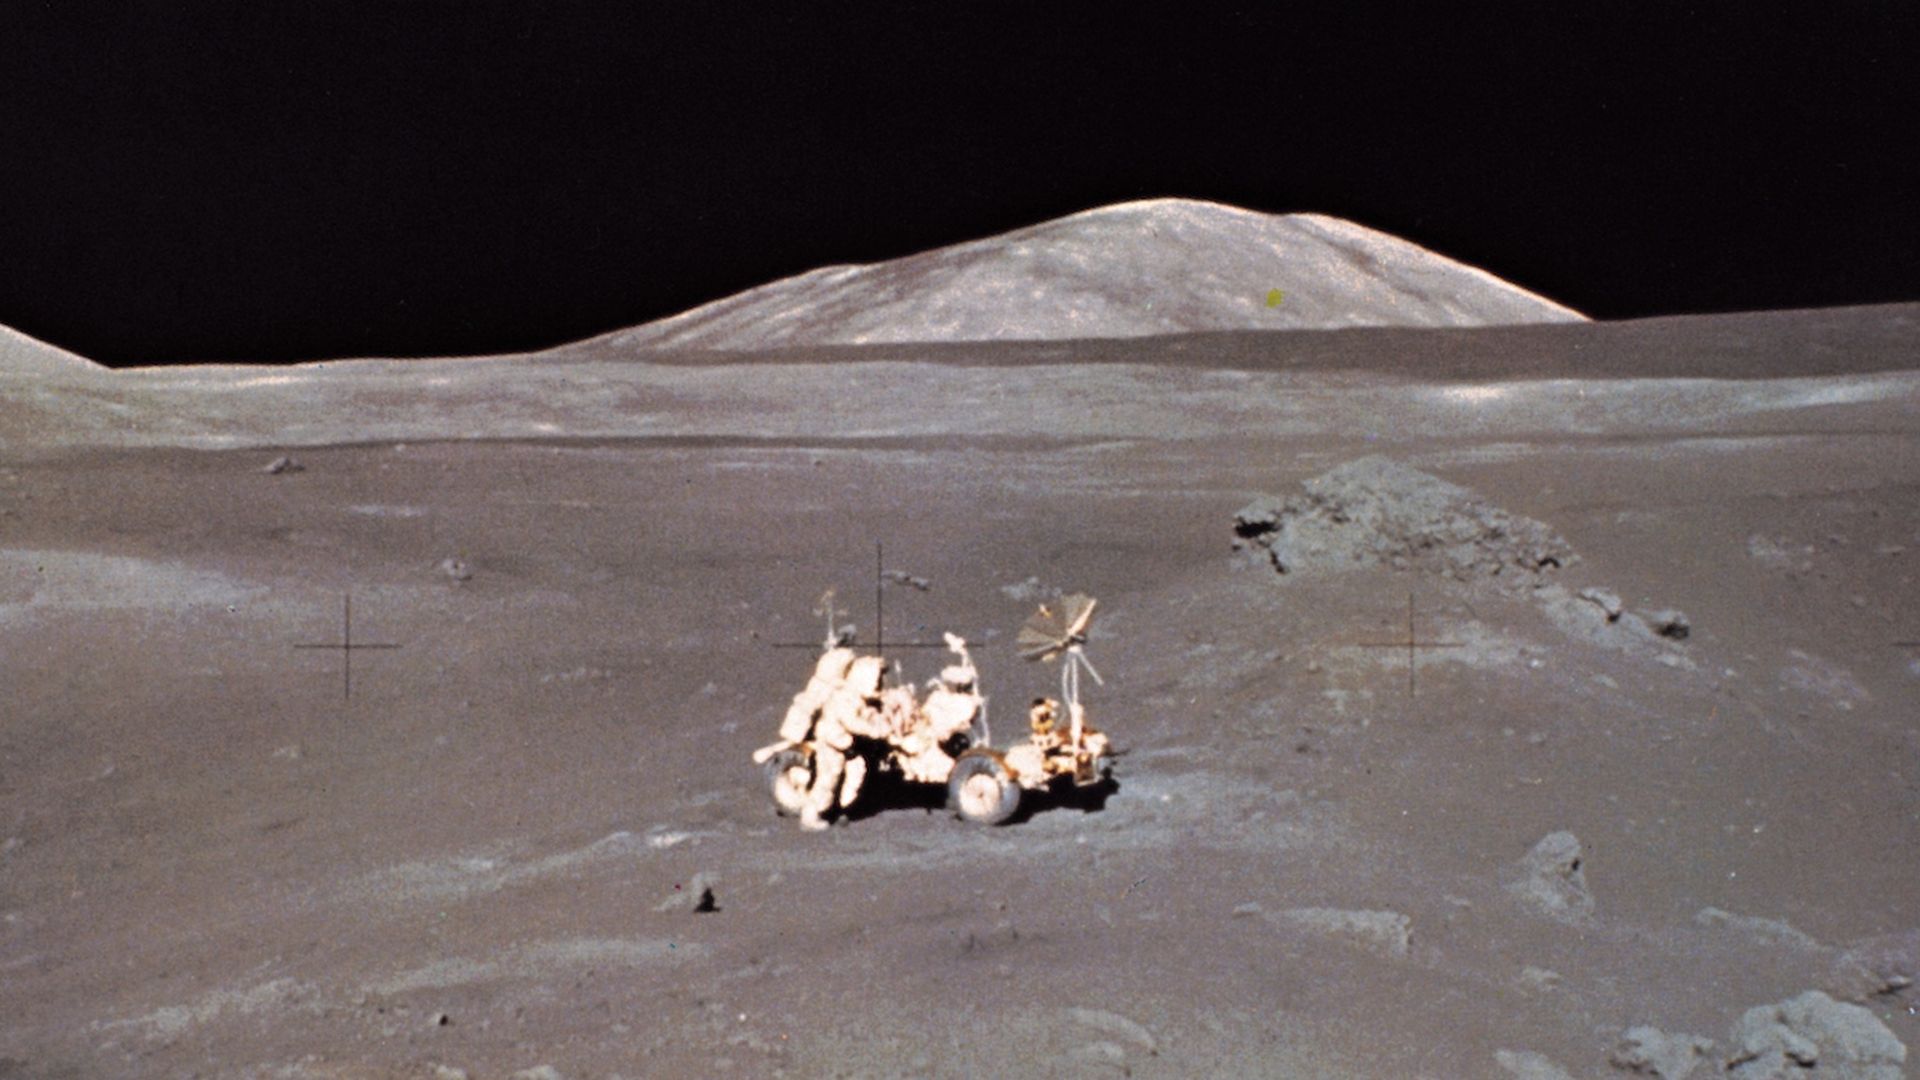 Harrison Schmitt Working At Lunar Roving Vehicle on the moon.